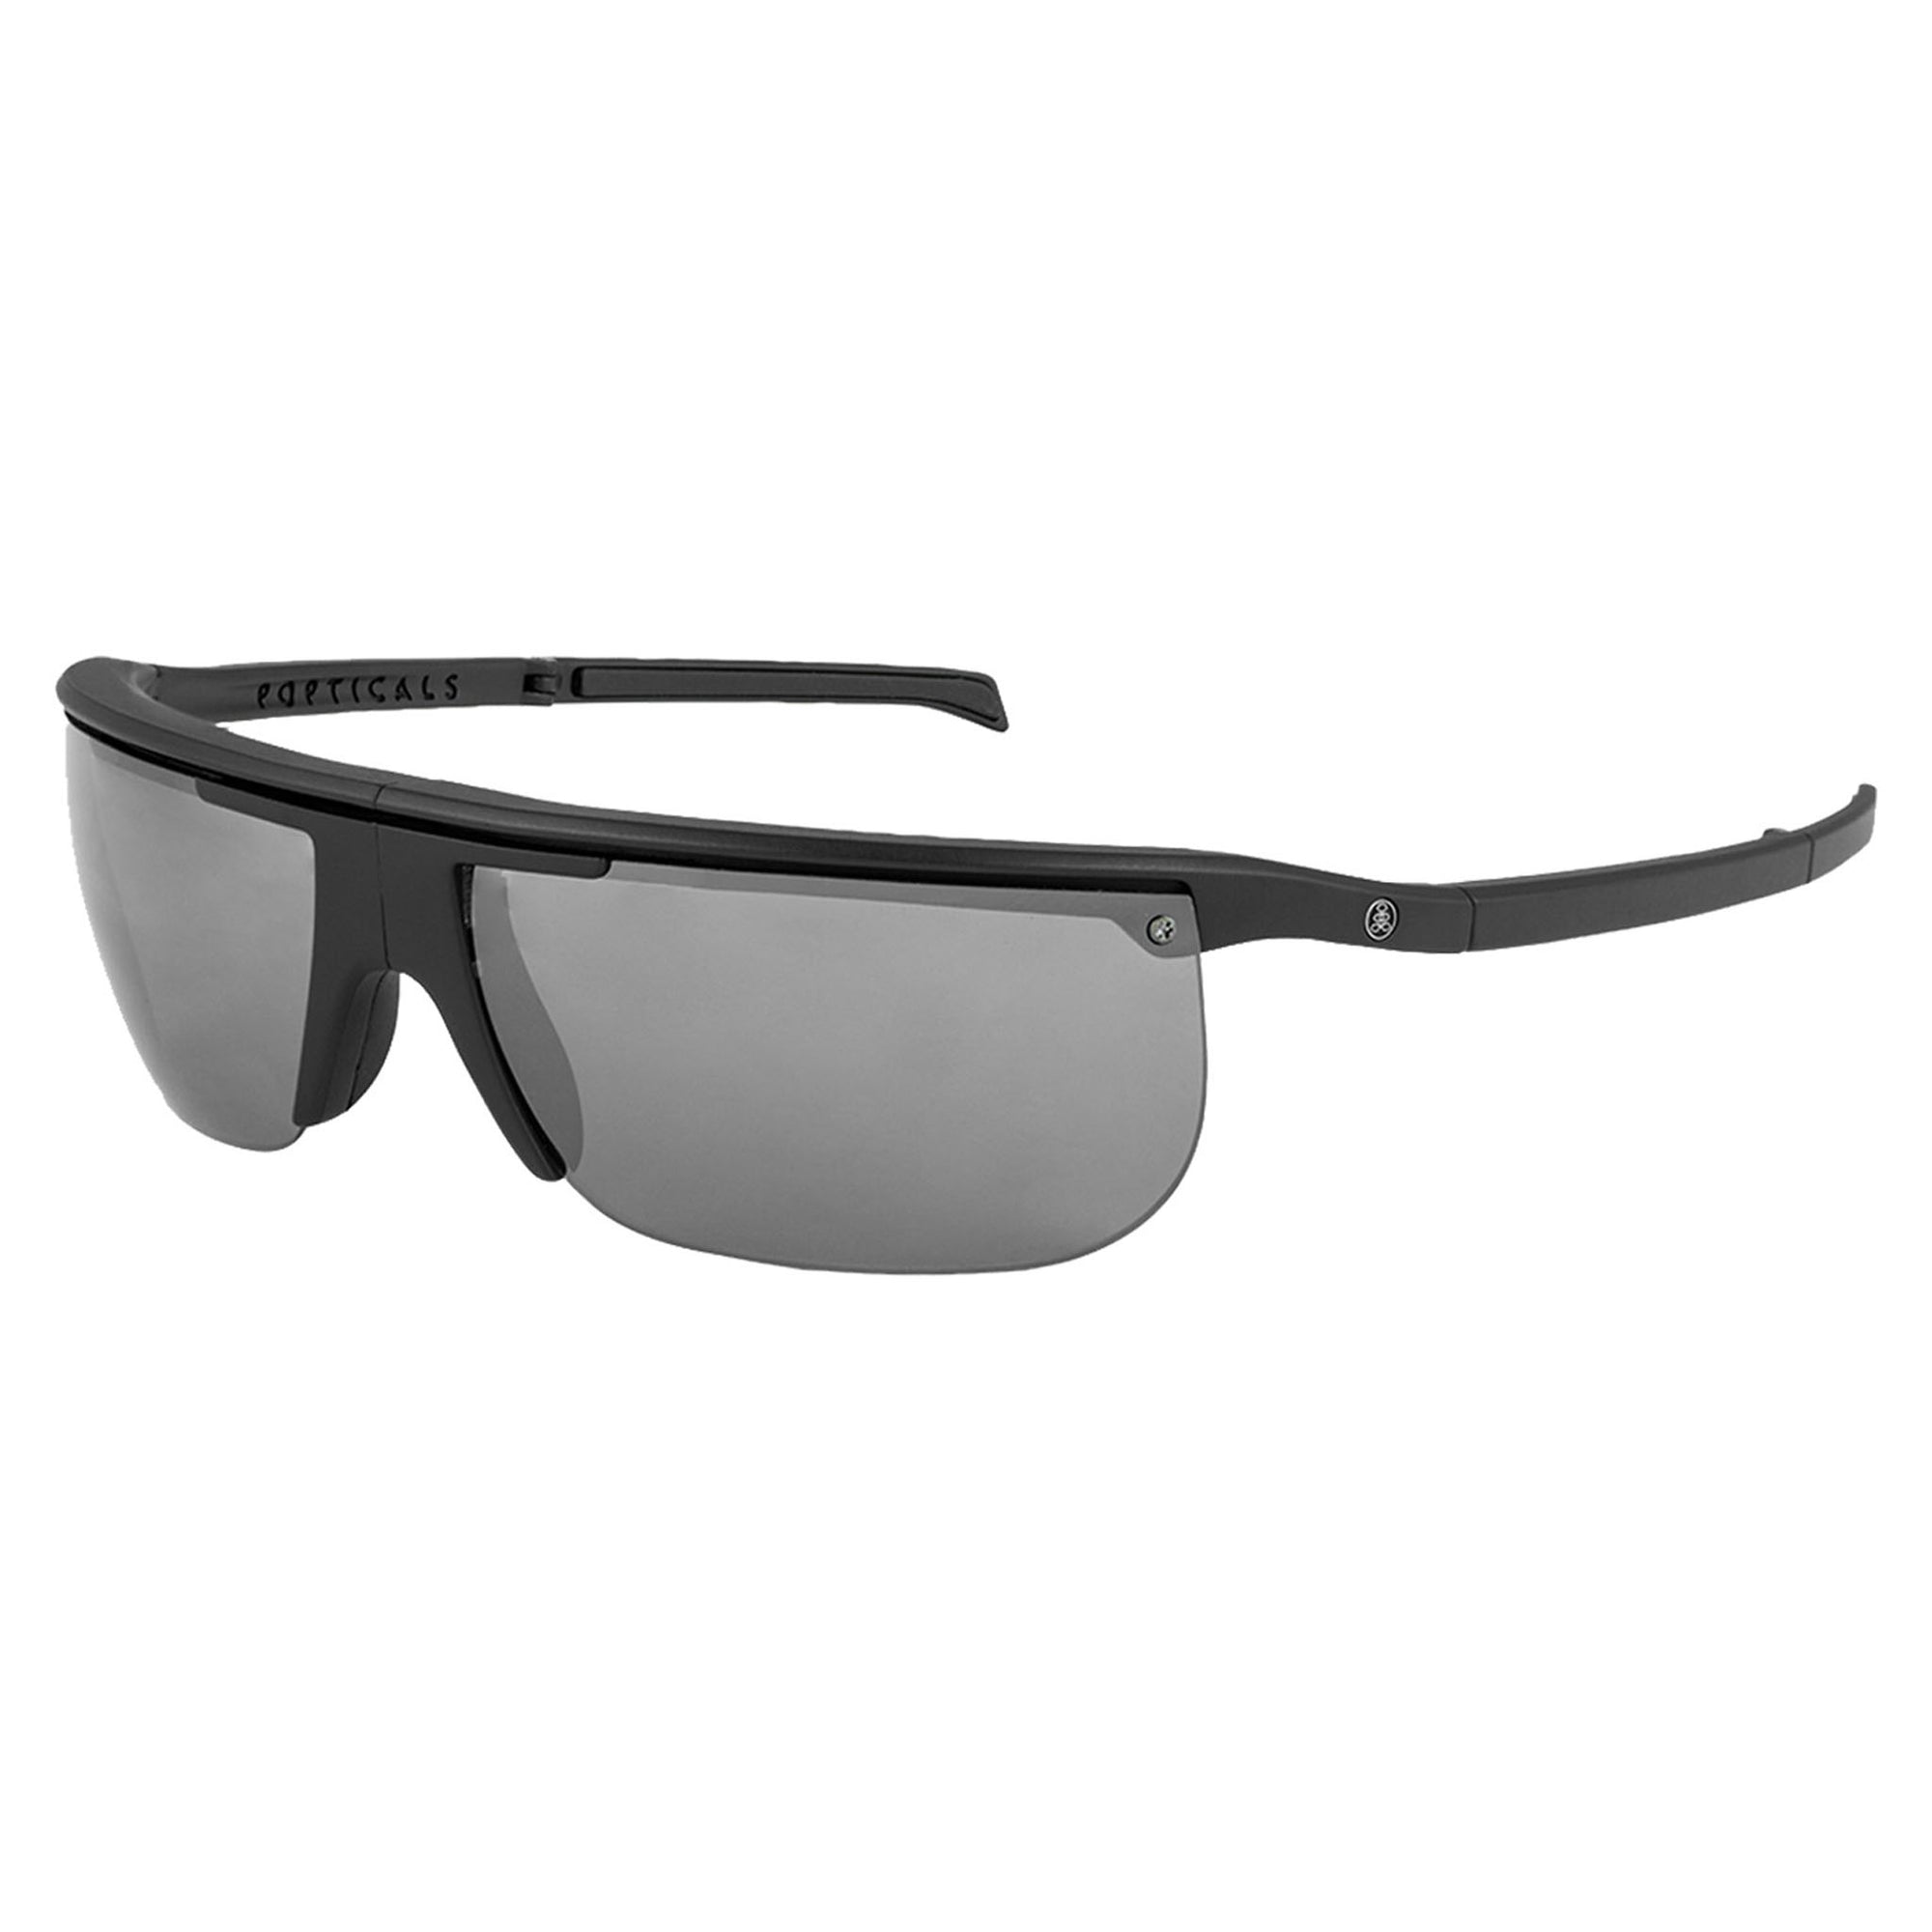 Popticals, Premium Compact Sunglasses, PopArt, 010030-BMLN, Polarized Sunglasses, Matte Black Frame, Gray Lenses with Silver Mirror Finish, Glam View